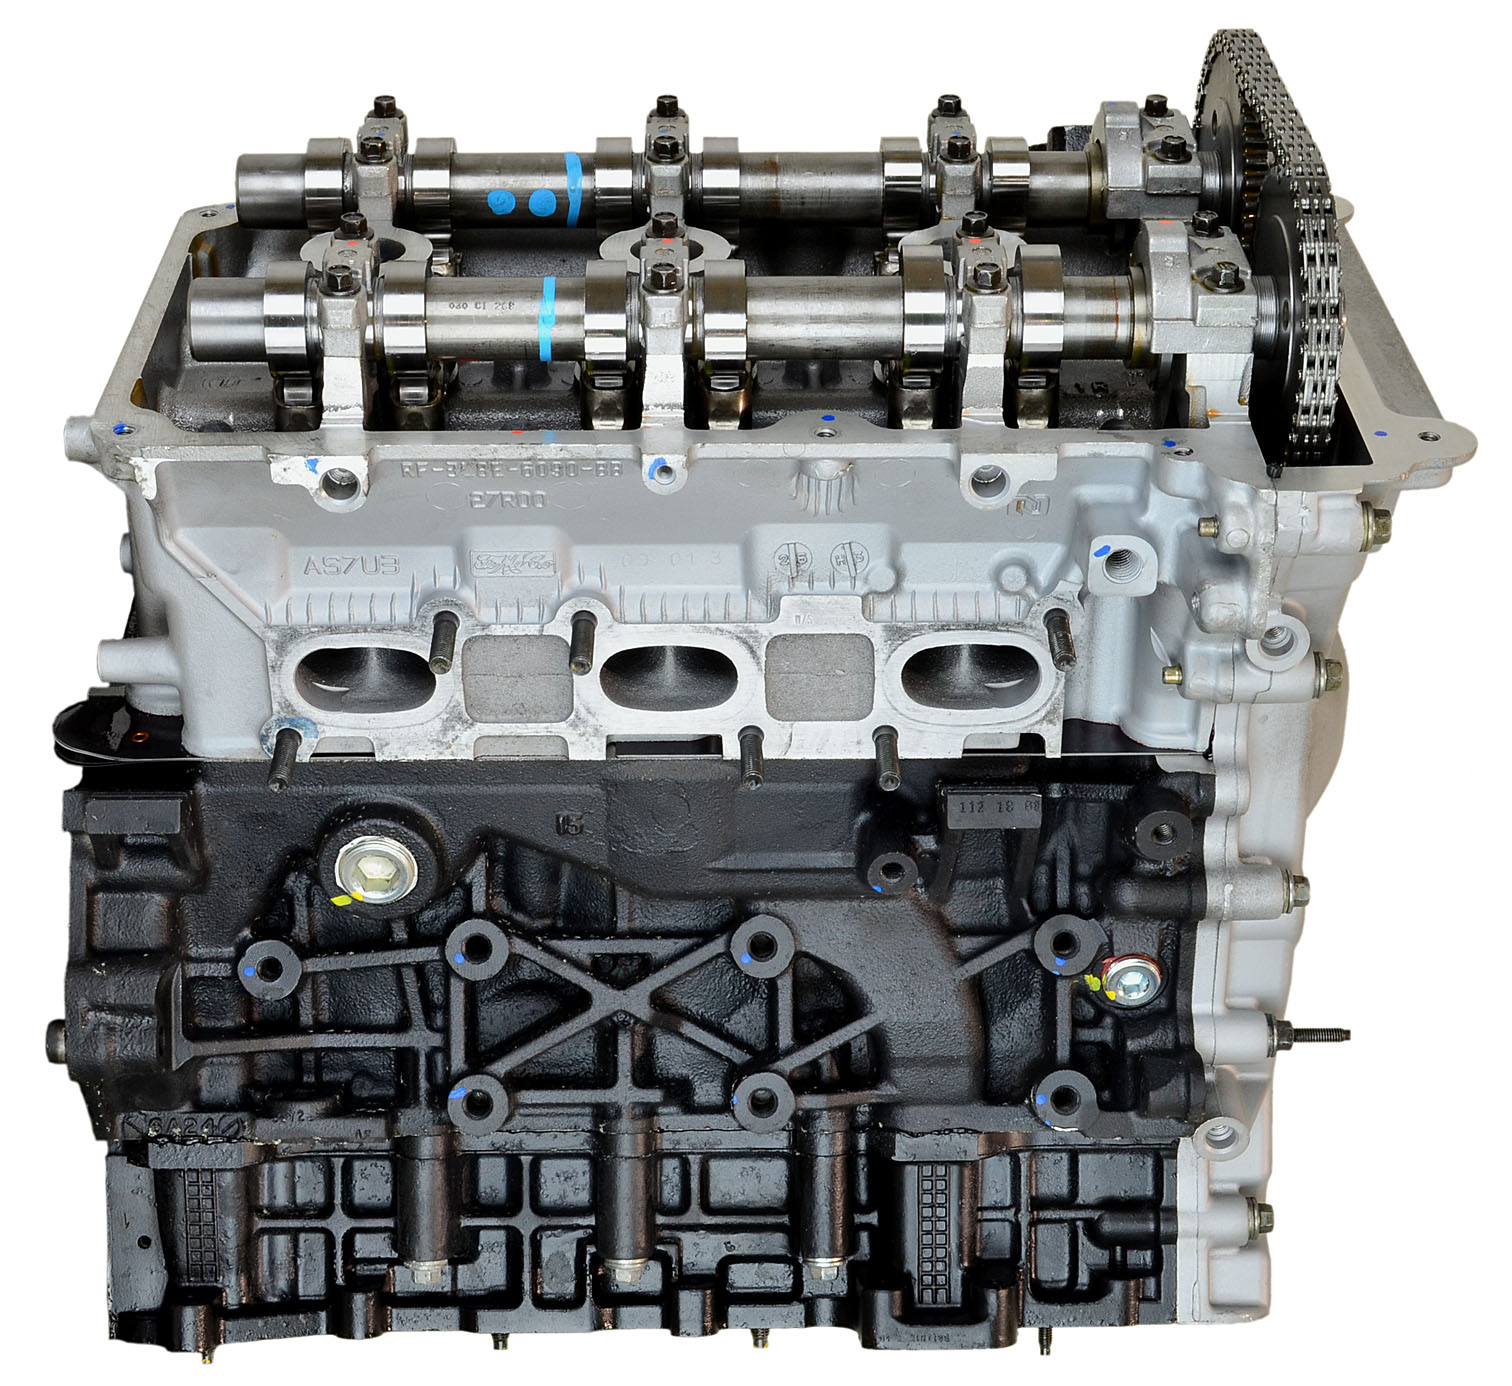 Ford Mazda Duratec 3.0L V6 Remanufactured Engine - 2001-2004